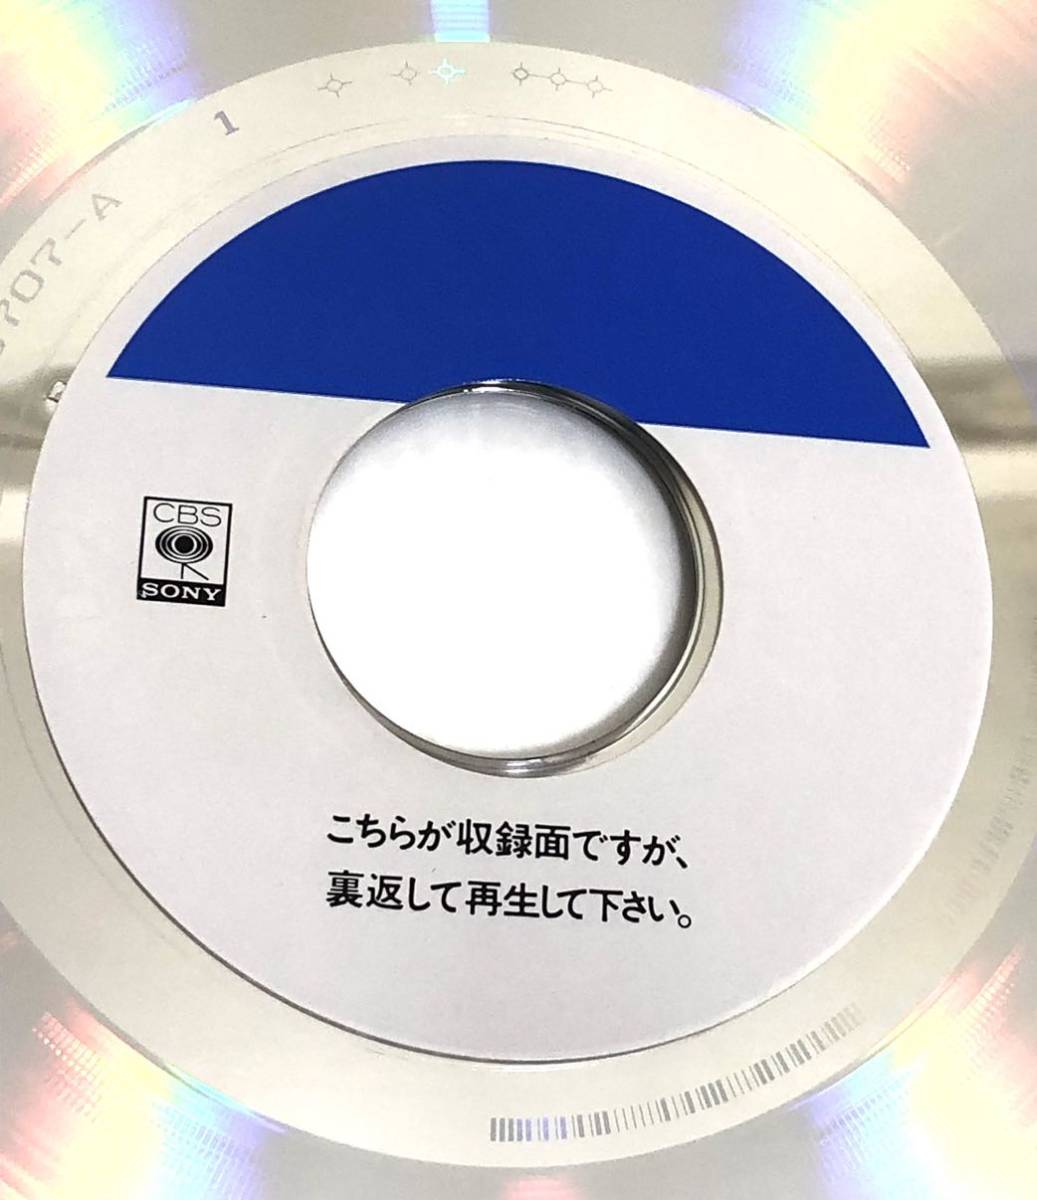  Showa Retro [ obi attaching Kudo Shizuka Laser karaoke disk ] cover illustration thing .....*LD laser disk 80s 90s